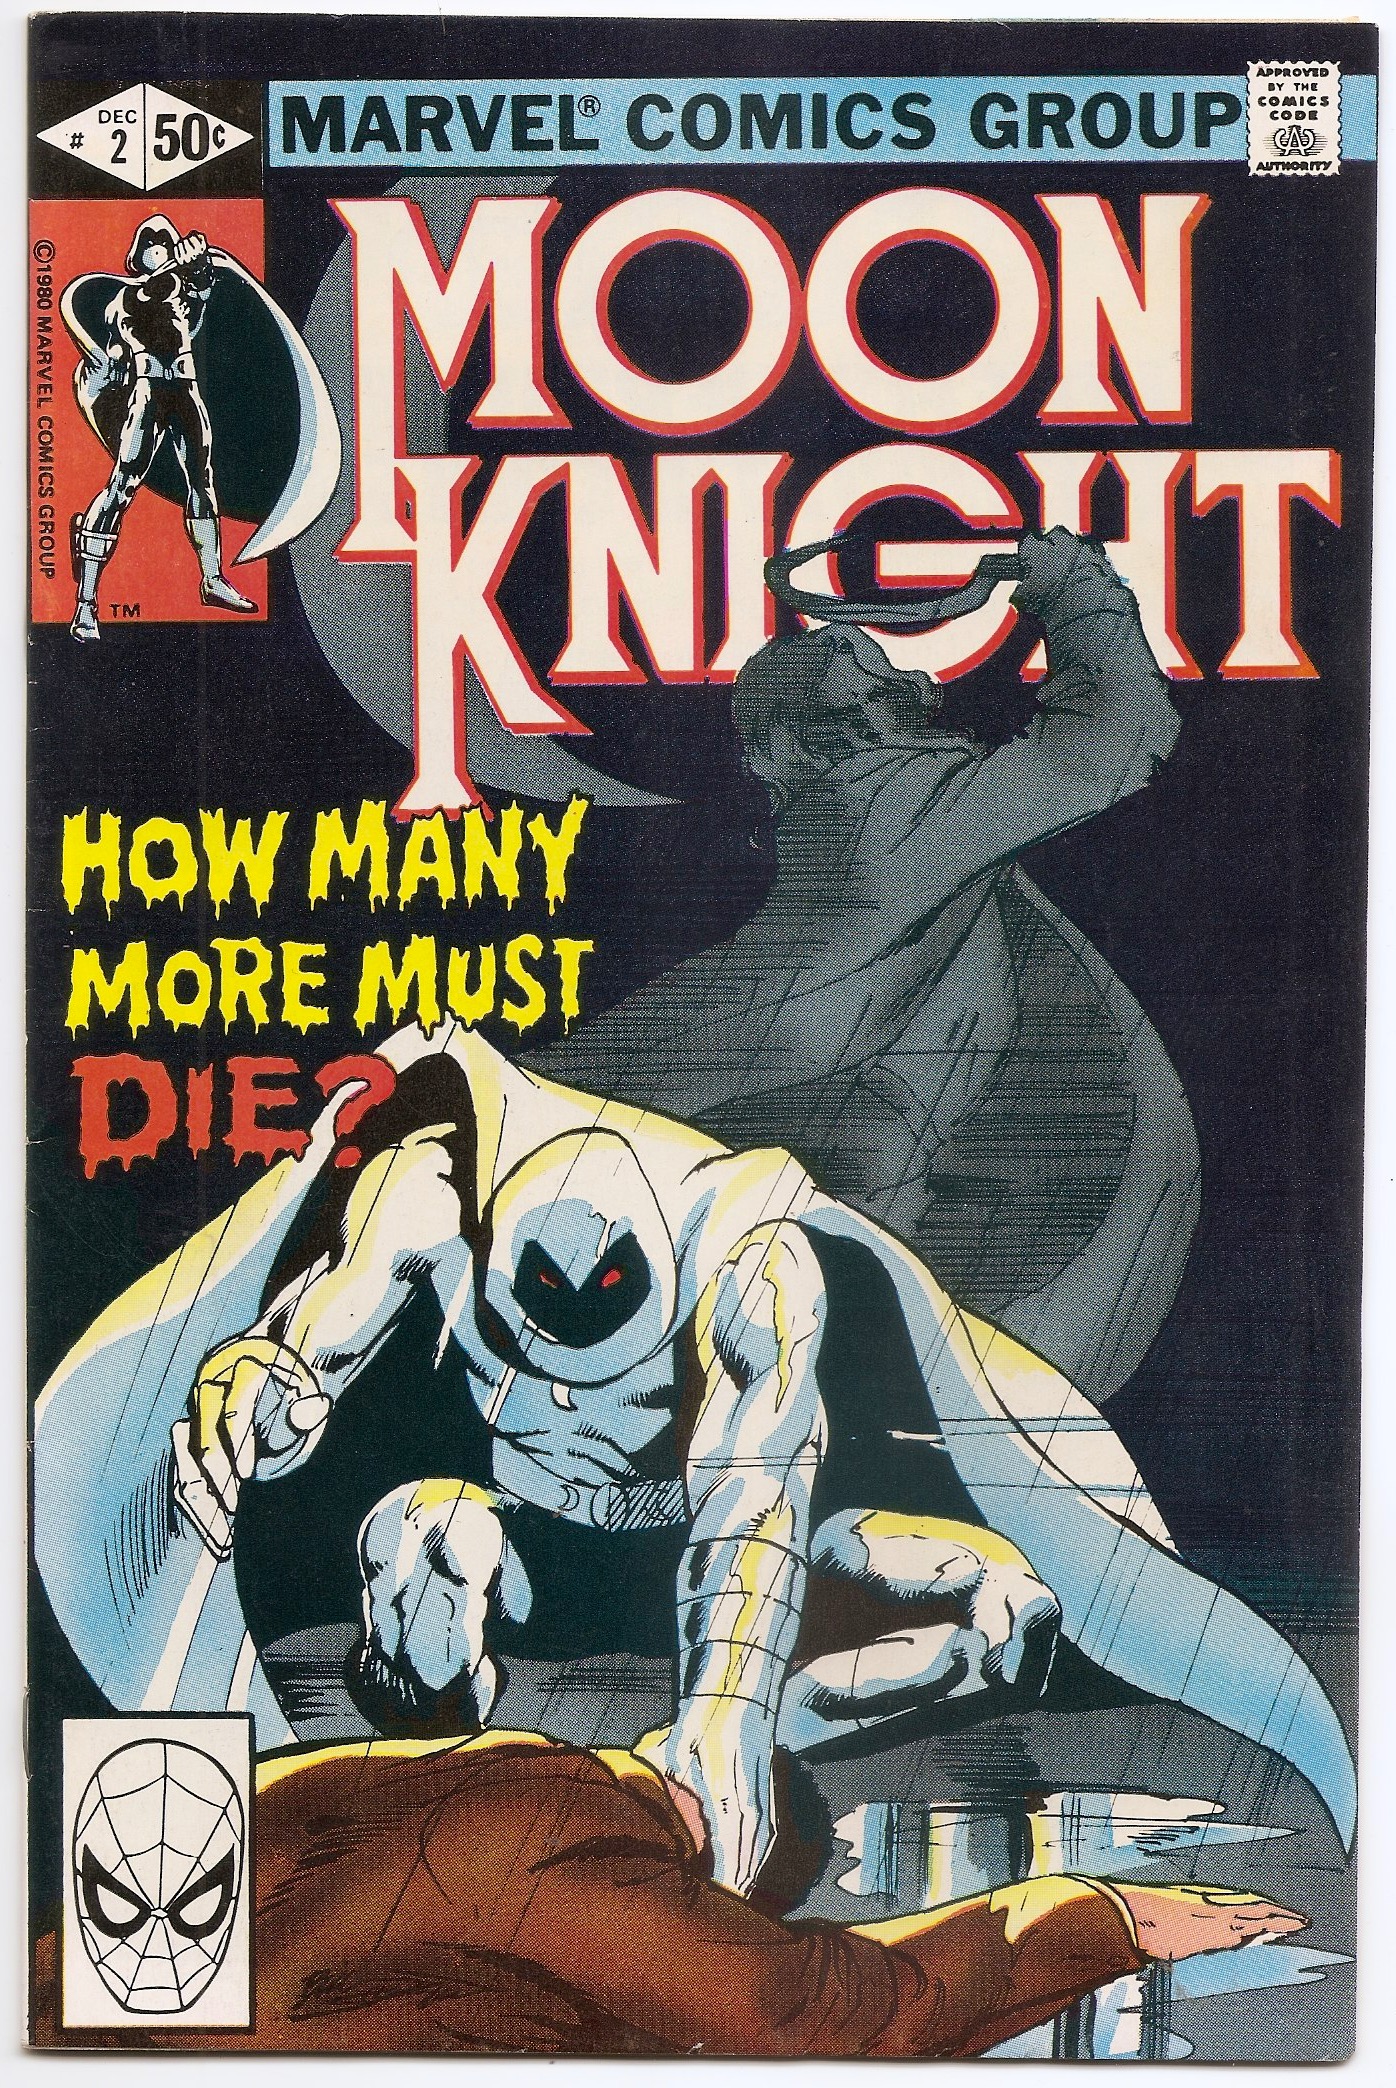 moon knight original comic